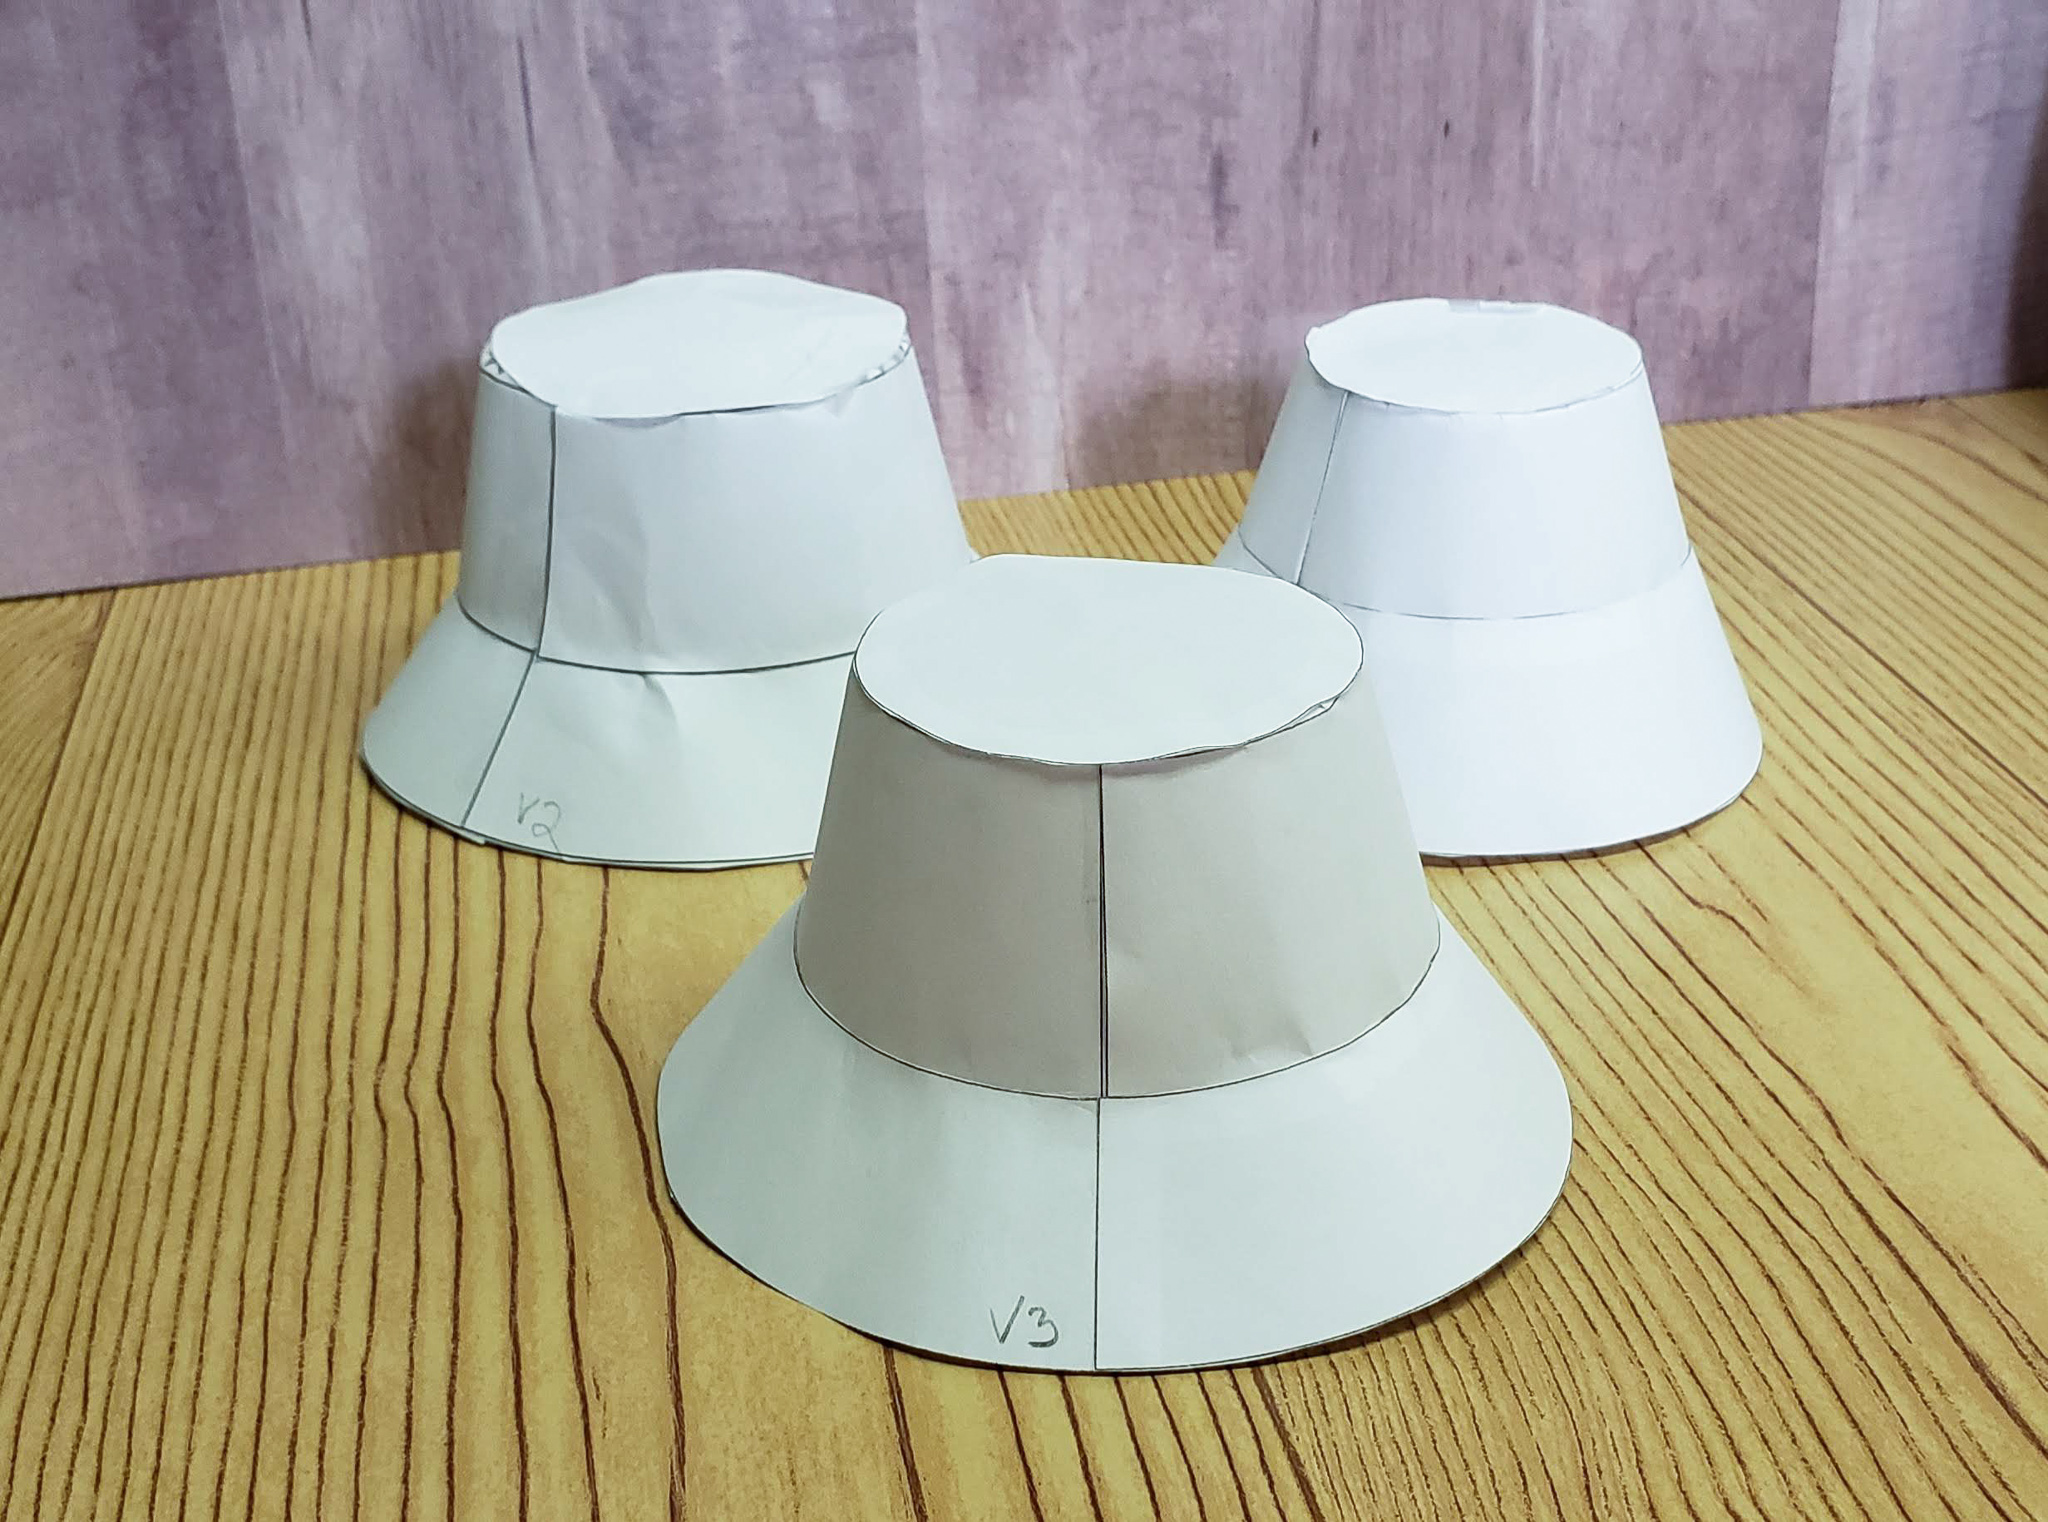 A photo of my three papercraft hats.